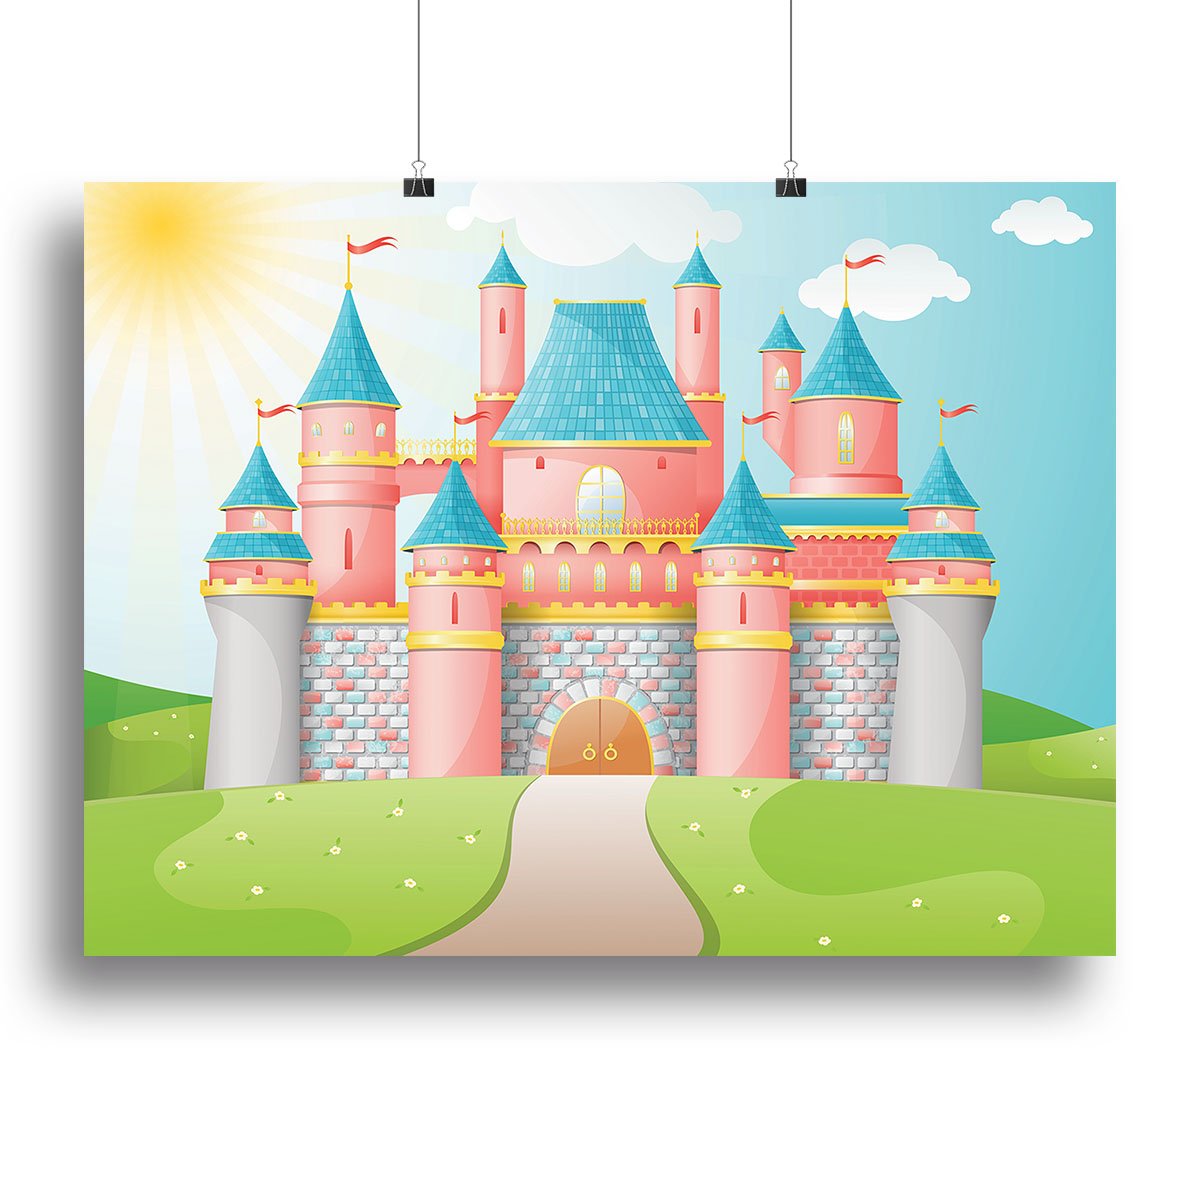 FairyTale castle illustration Canvas Print or Poster